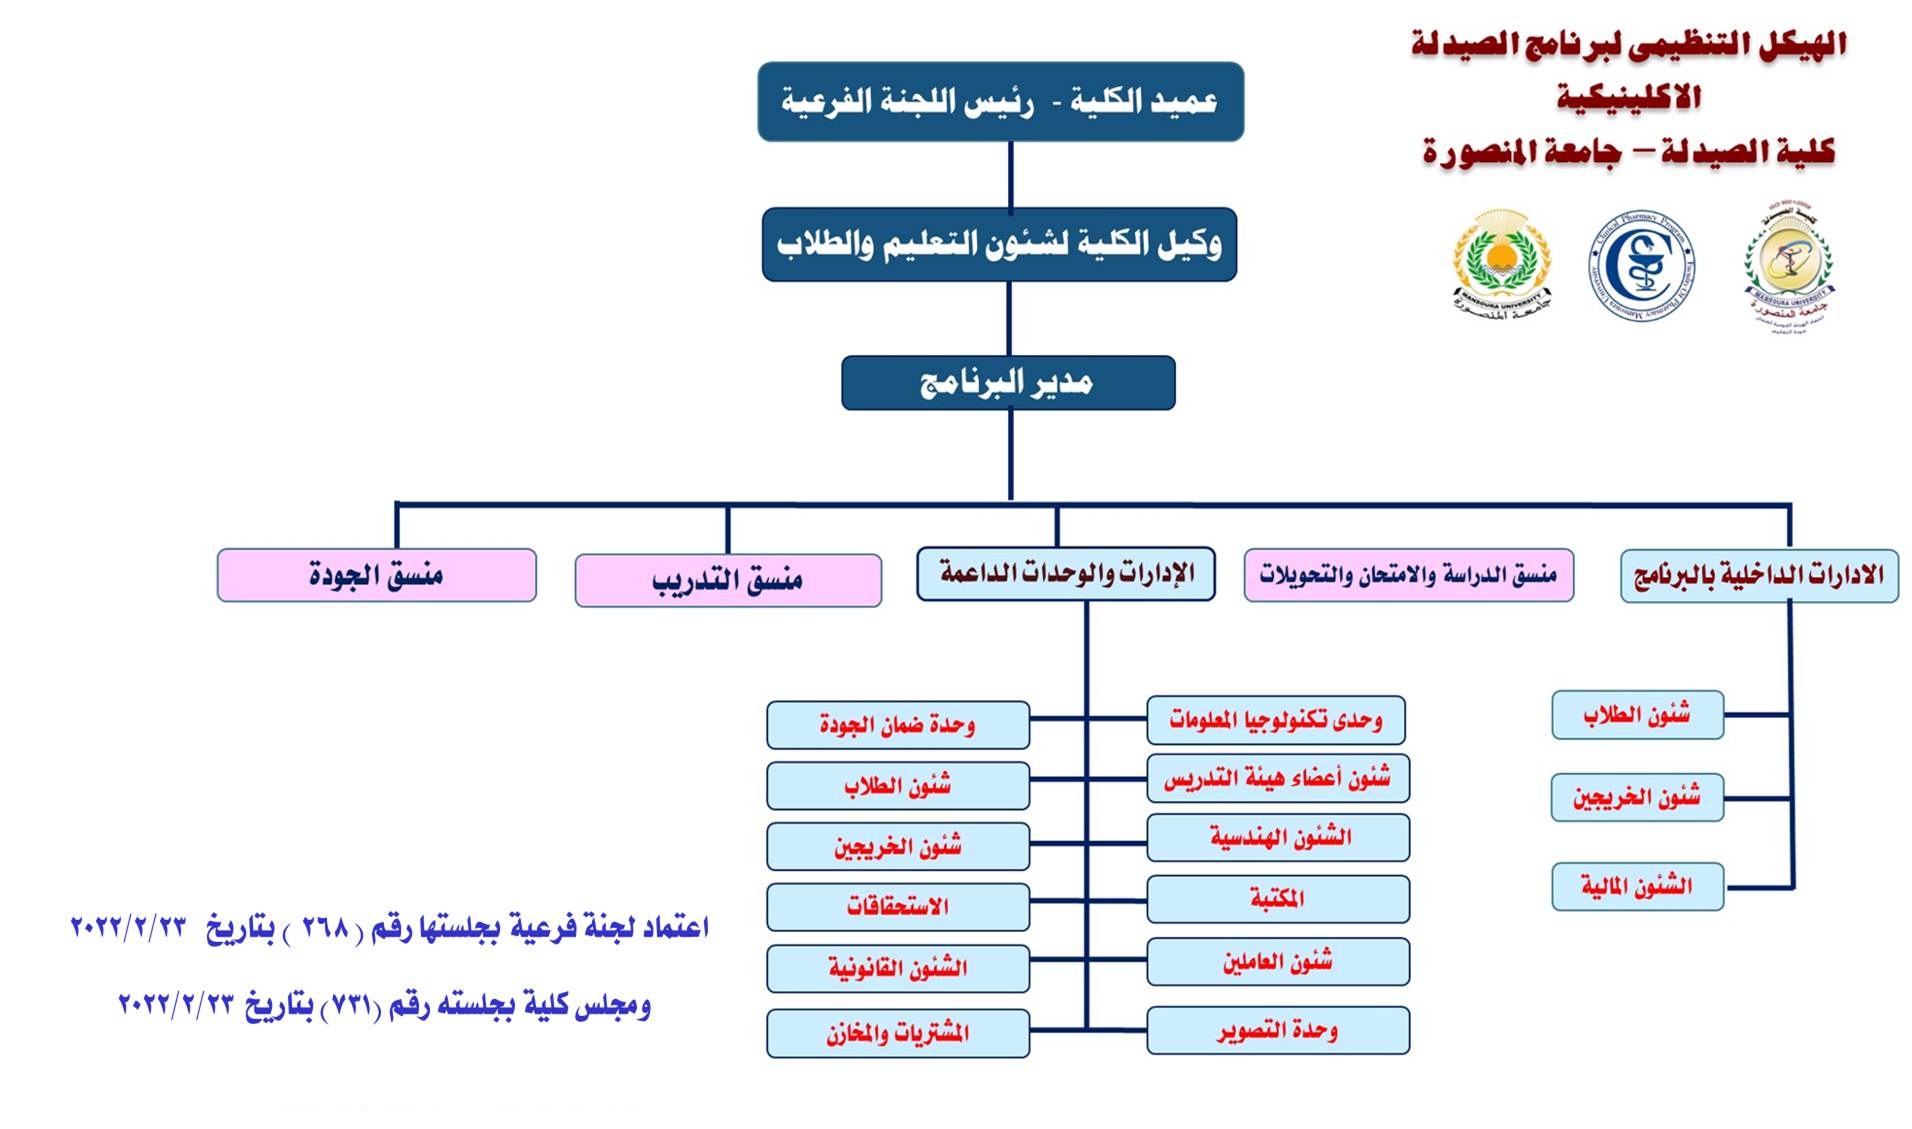 organizational structure